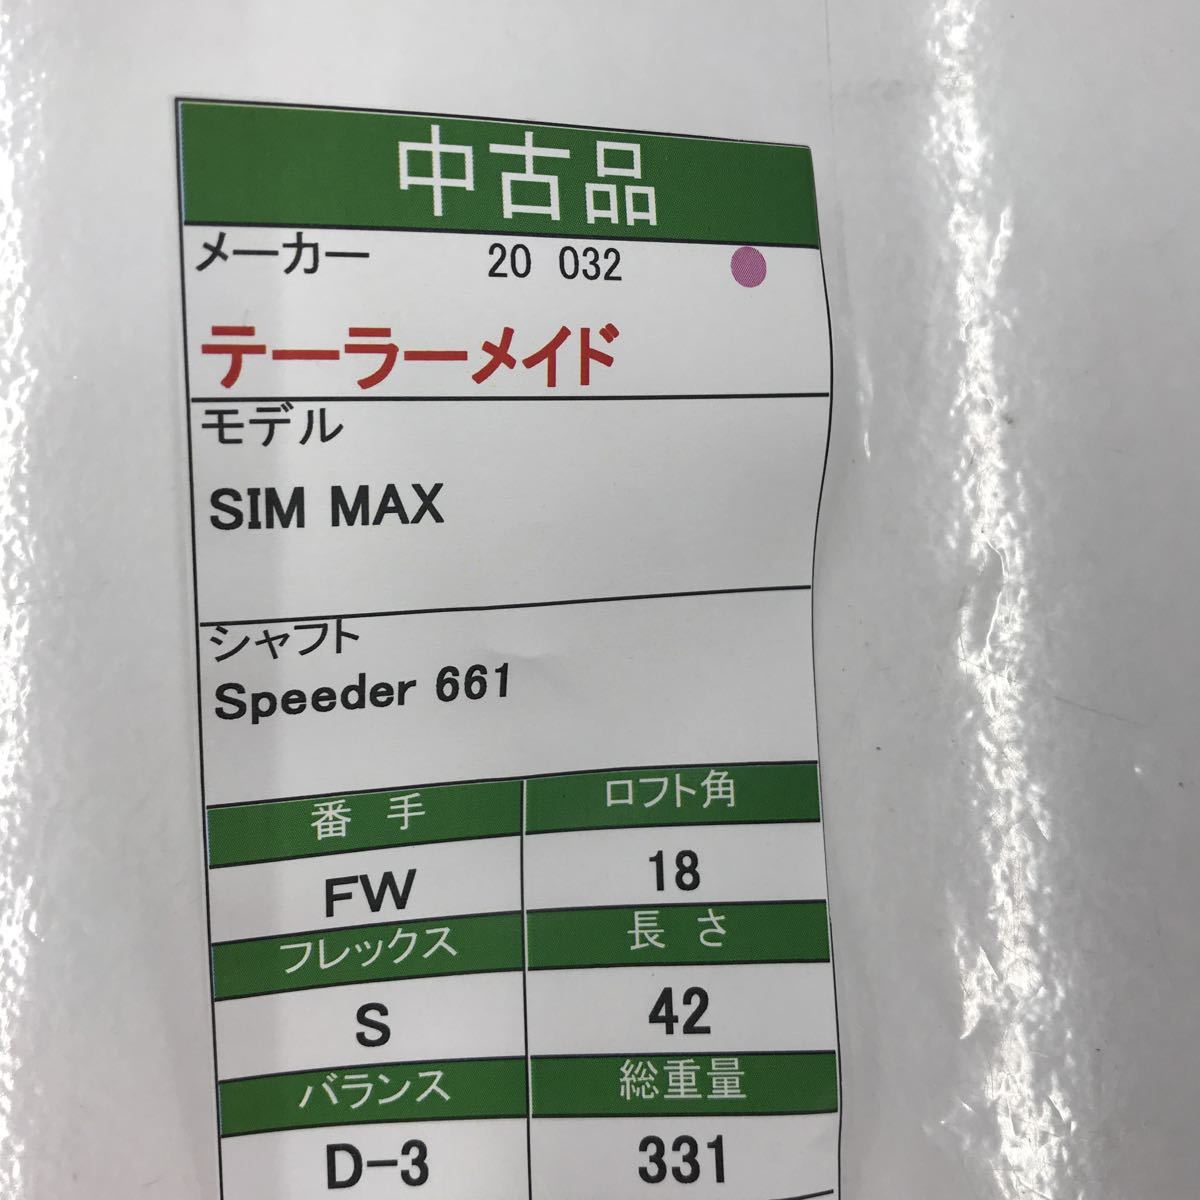 FW テーラーメイド SIM MAX 18度 flex:S Speeder661 EVOLUTION Ⅳ